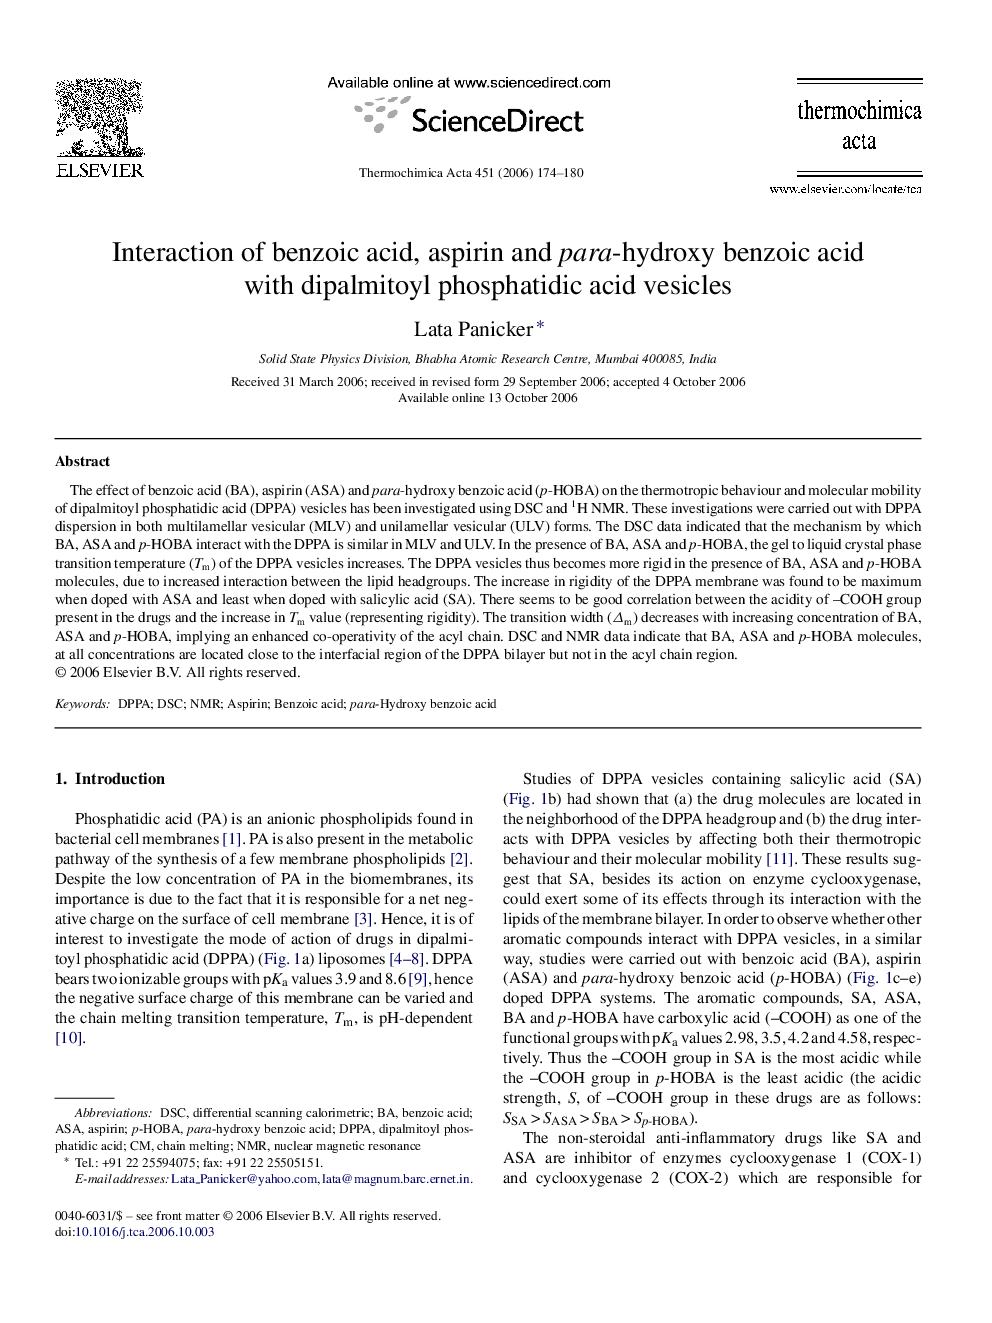 Interaction of benzoic acid, aspirin and para-hydroxy benzoic acid with dipalmitoyl phosphatidic acid vesicles